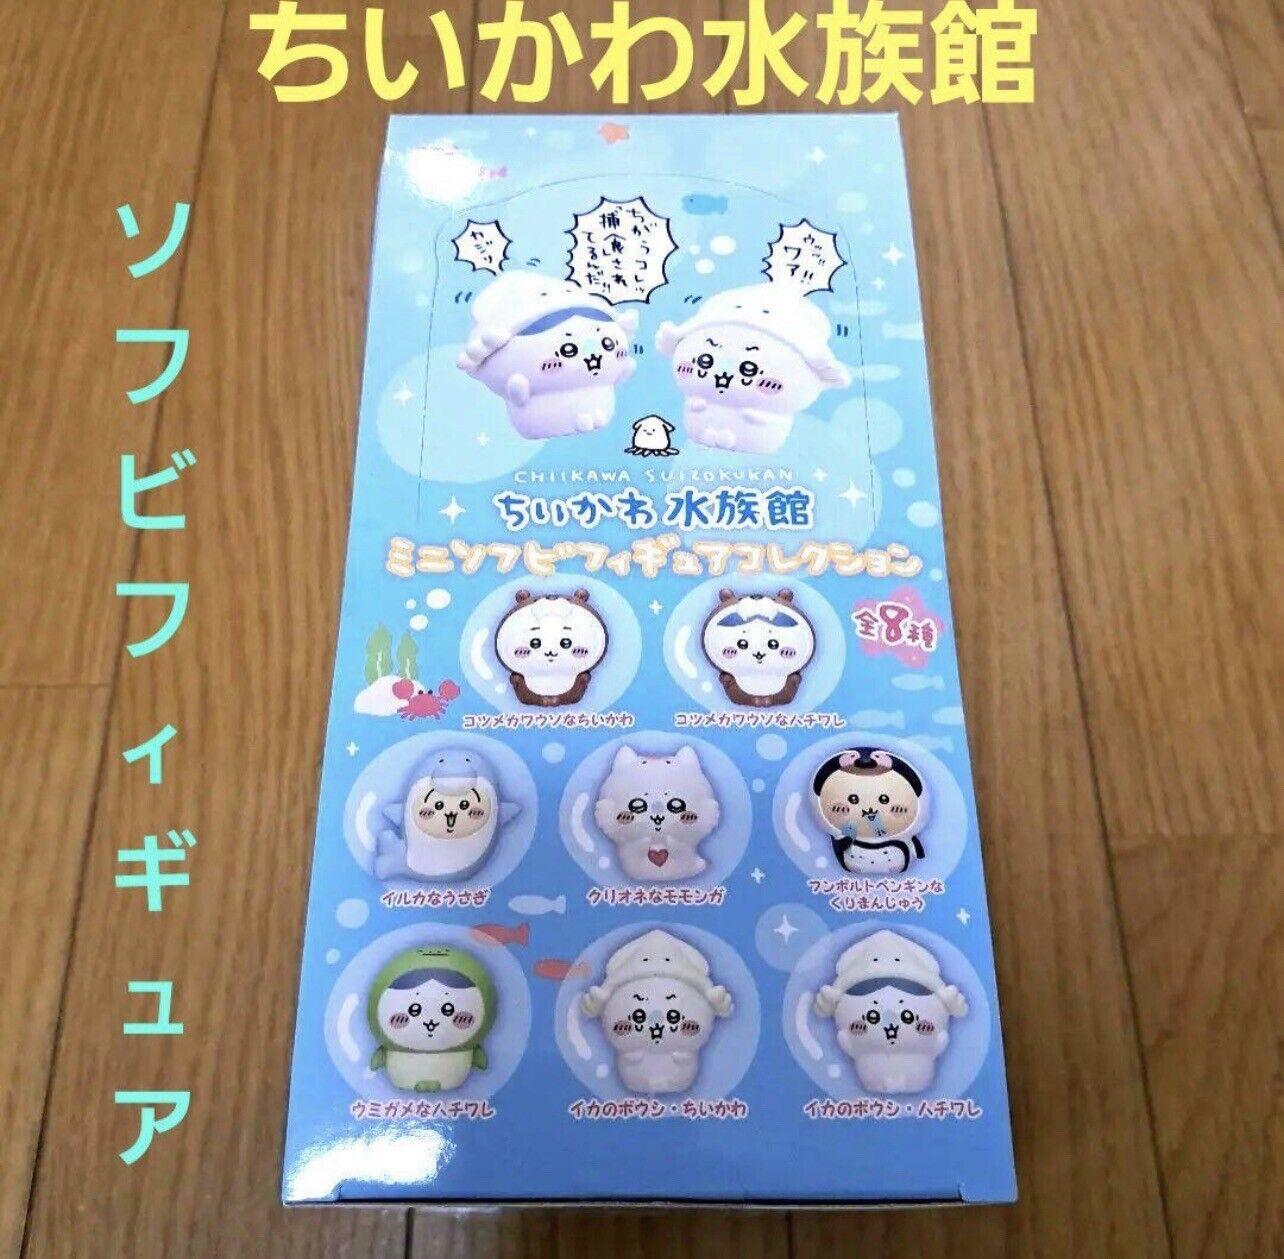 Very Popular Chiikawa Aquarium Mini Soft Vinyl Figure Collection Set Of 8 New